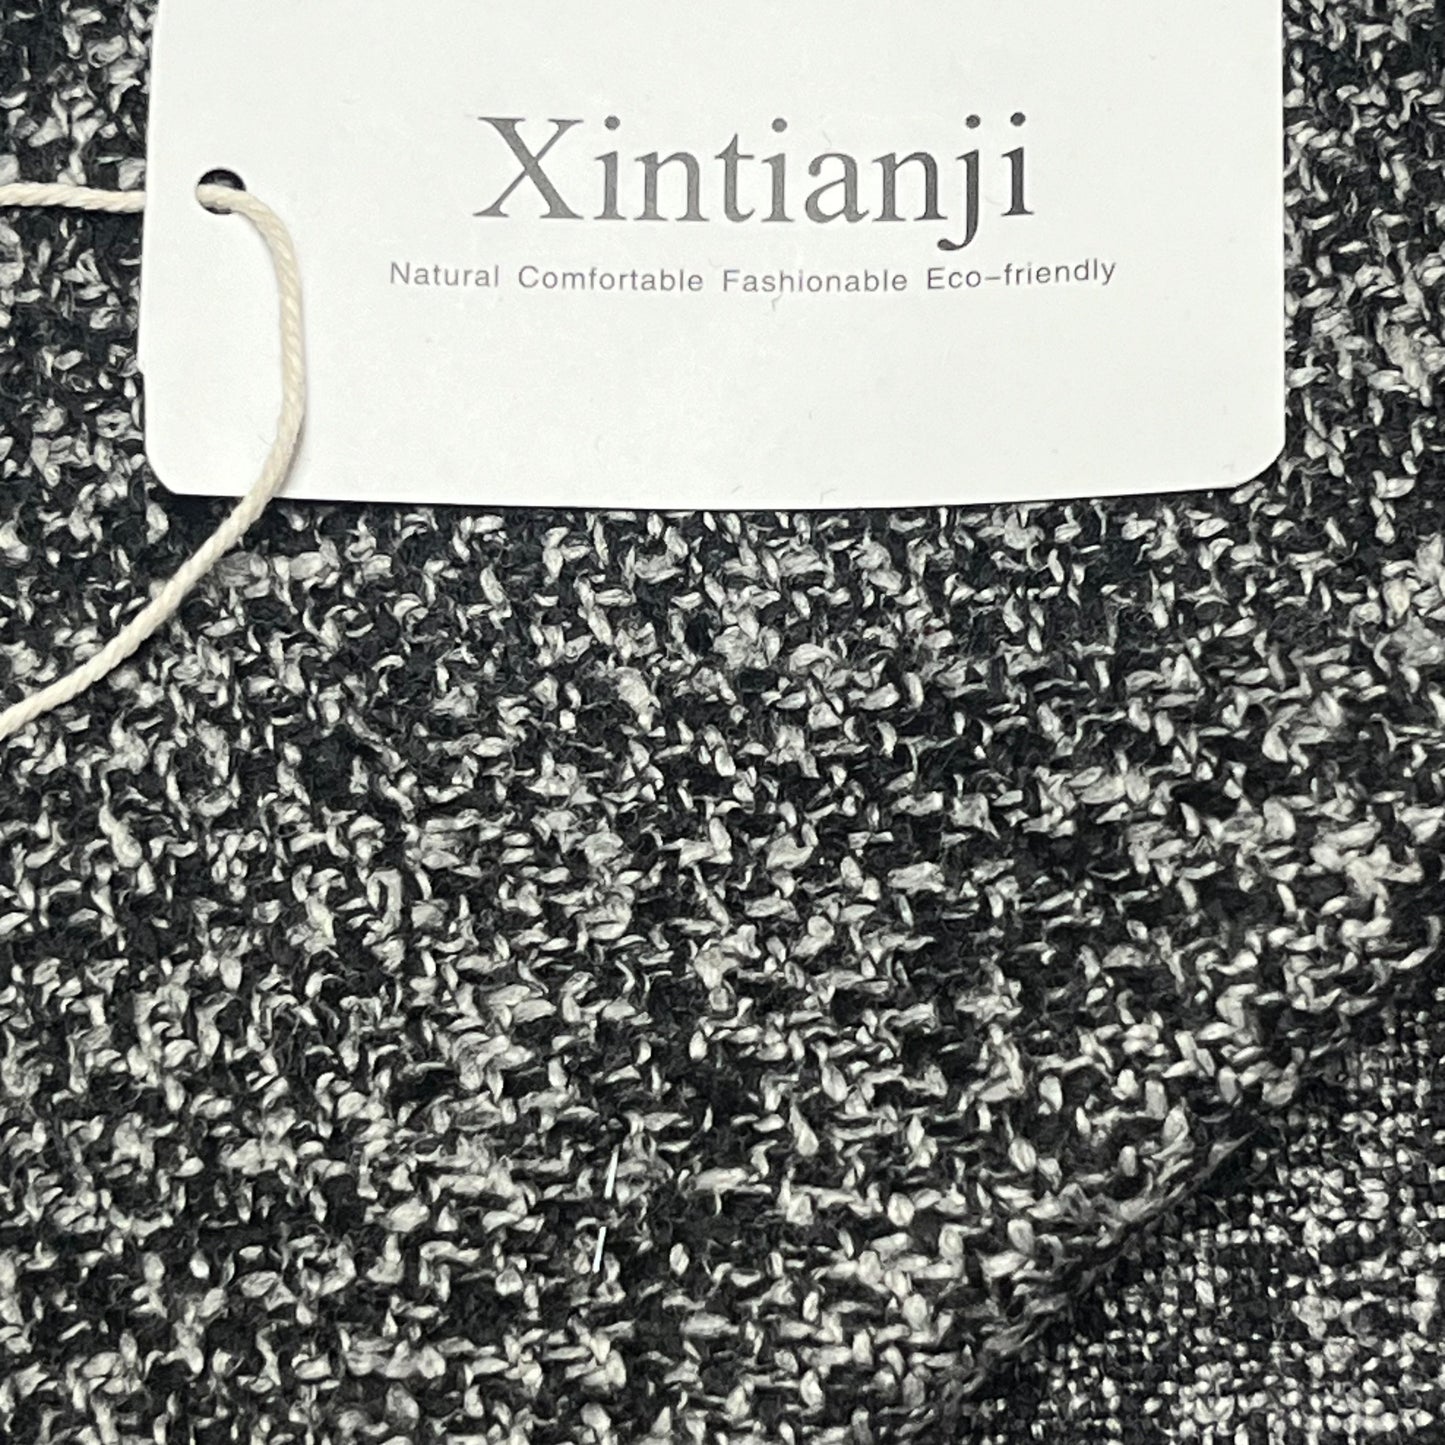 NTG Fad Black / 100x140cm Xintianji Woollen Cloth